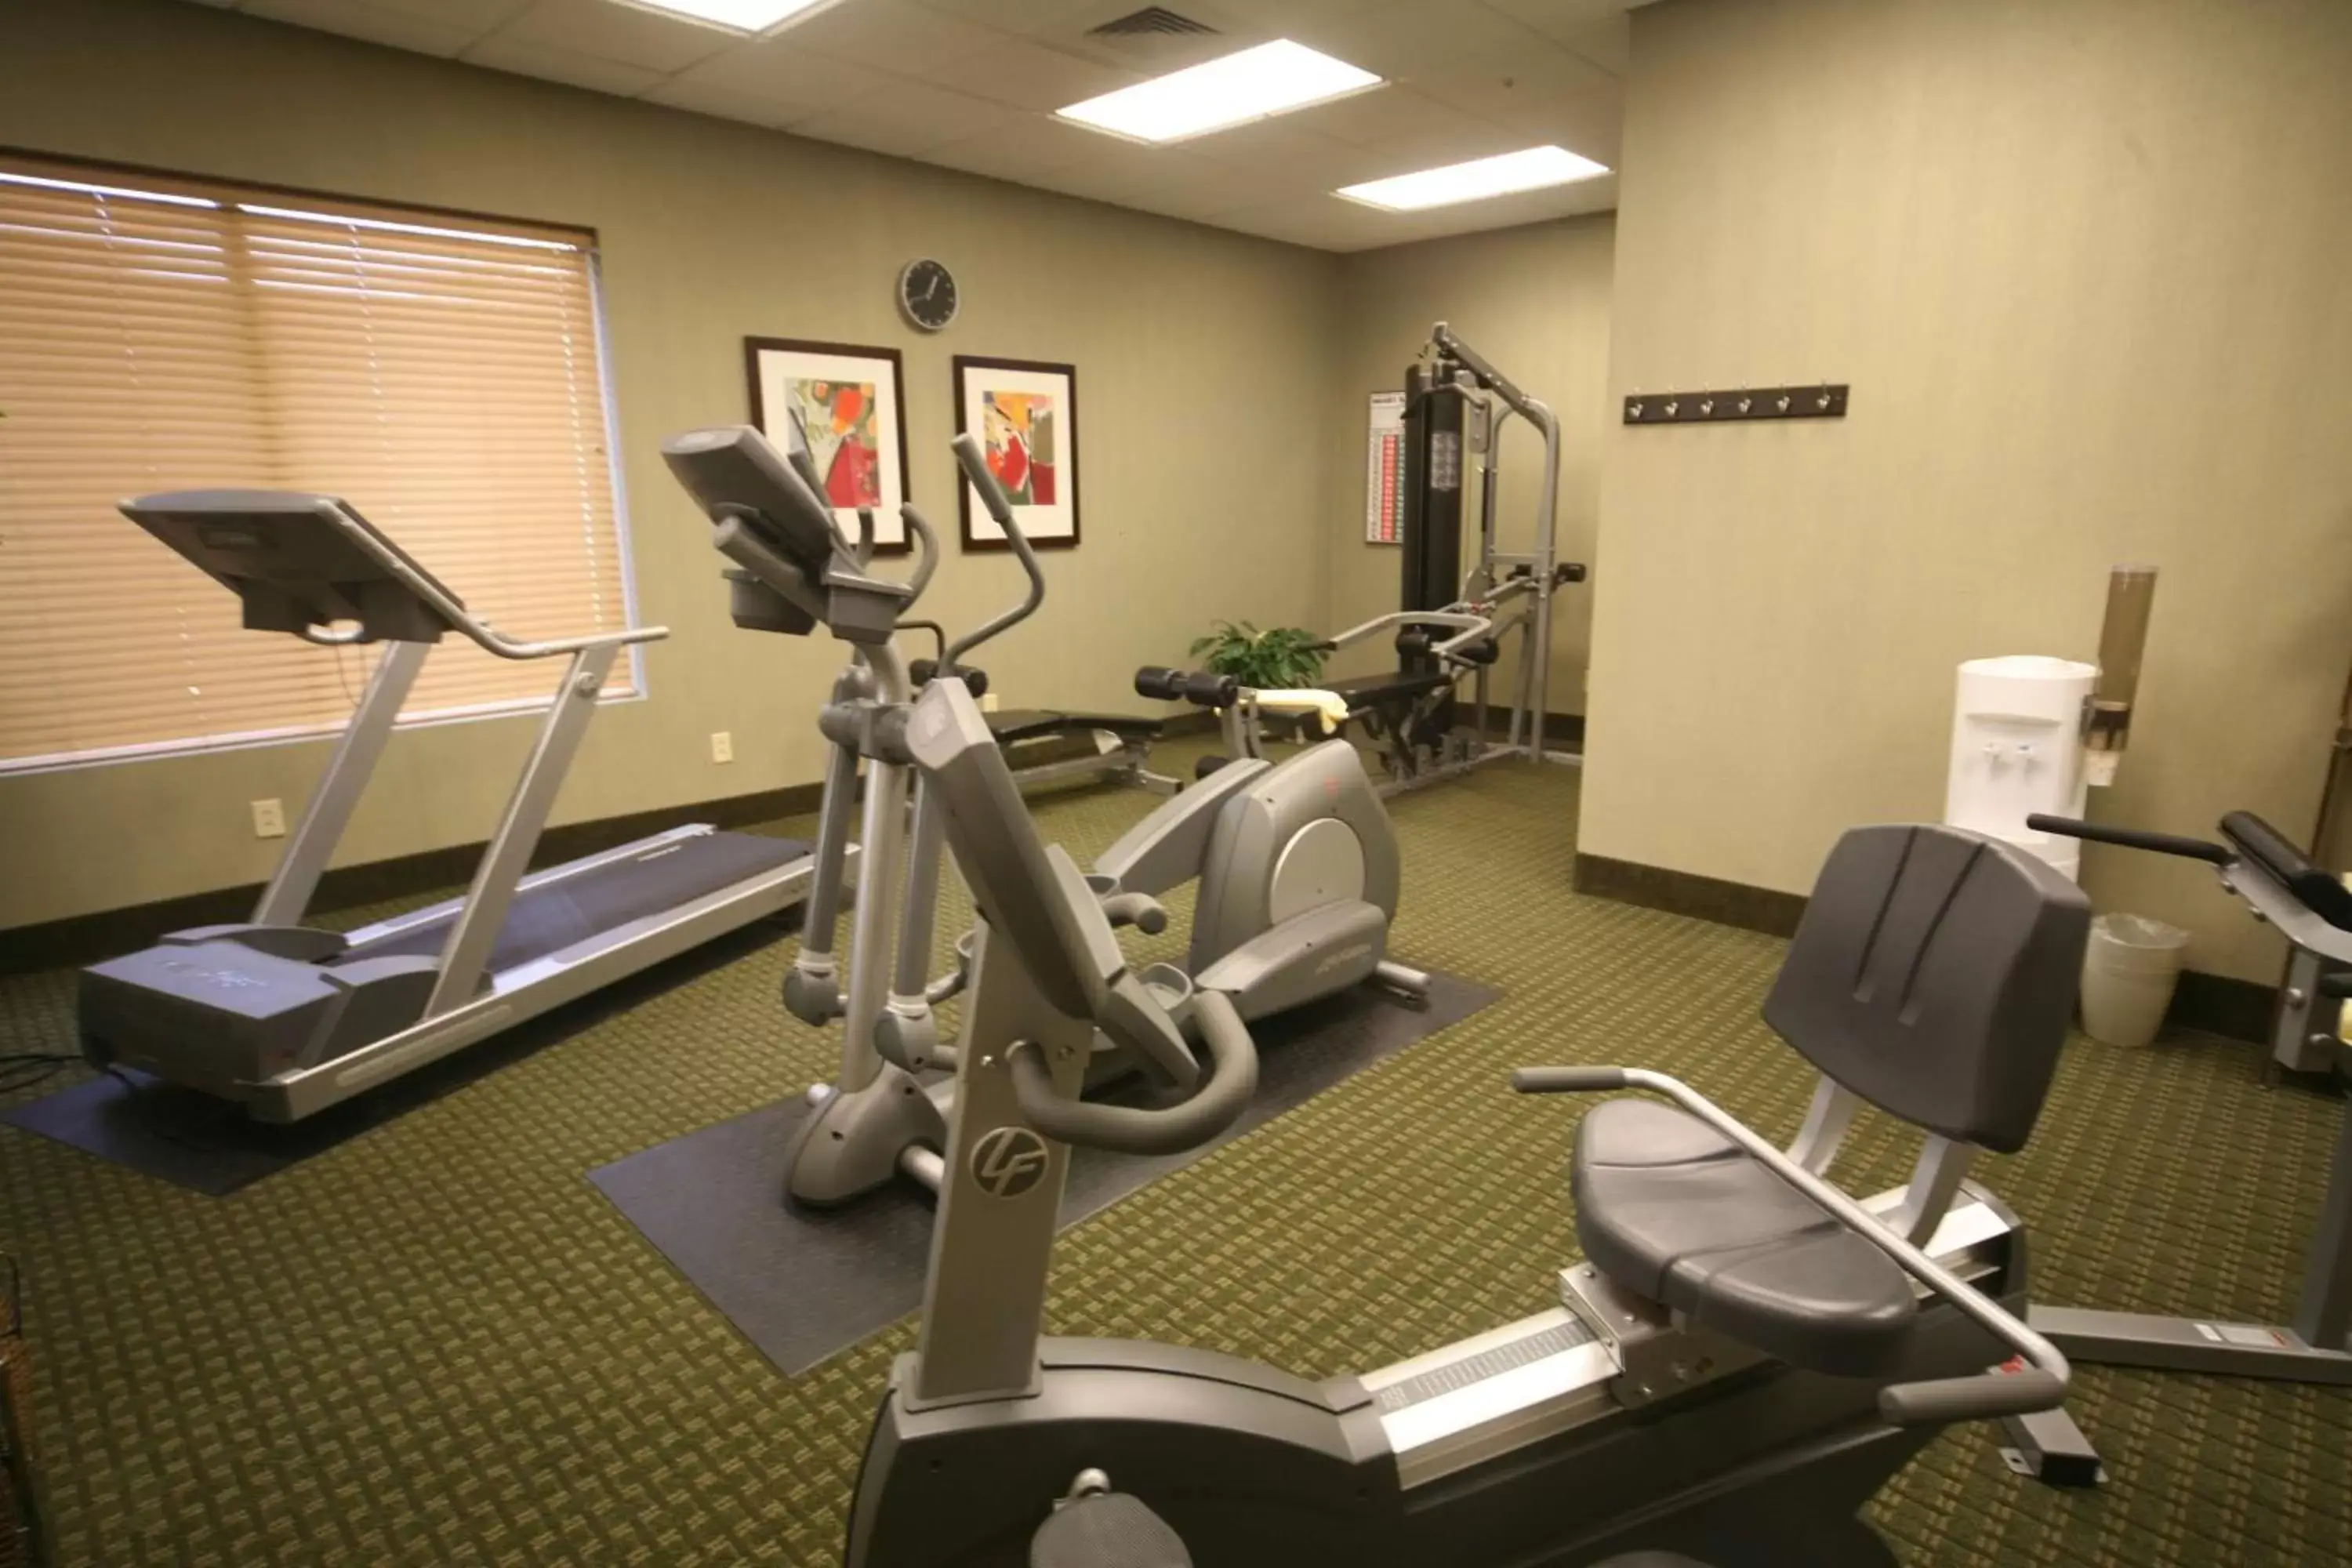 Fitness centre/facilities, Fitness Center/Facilities in Hilton Garden Inn Anderson